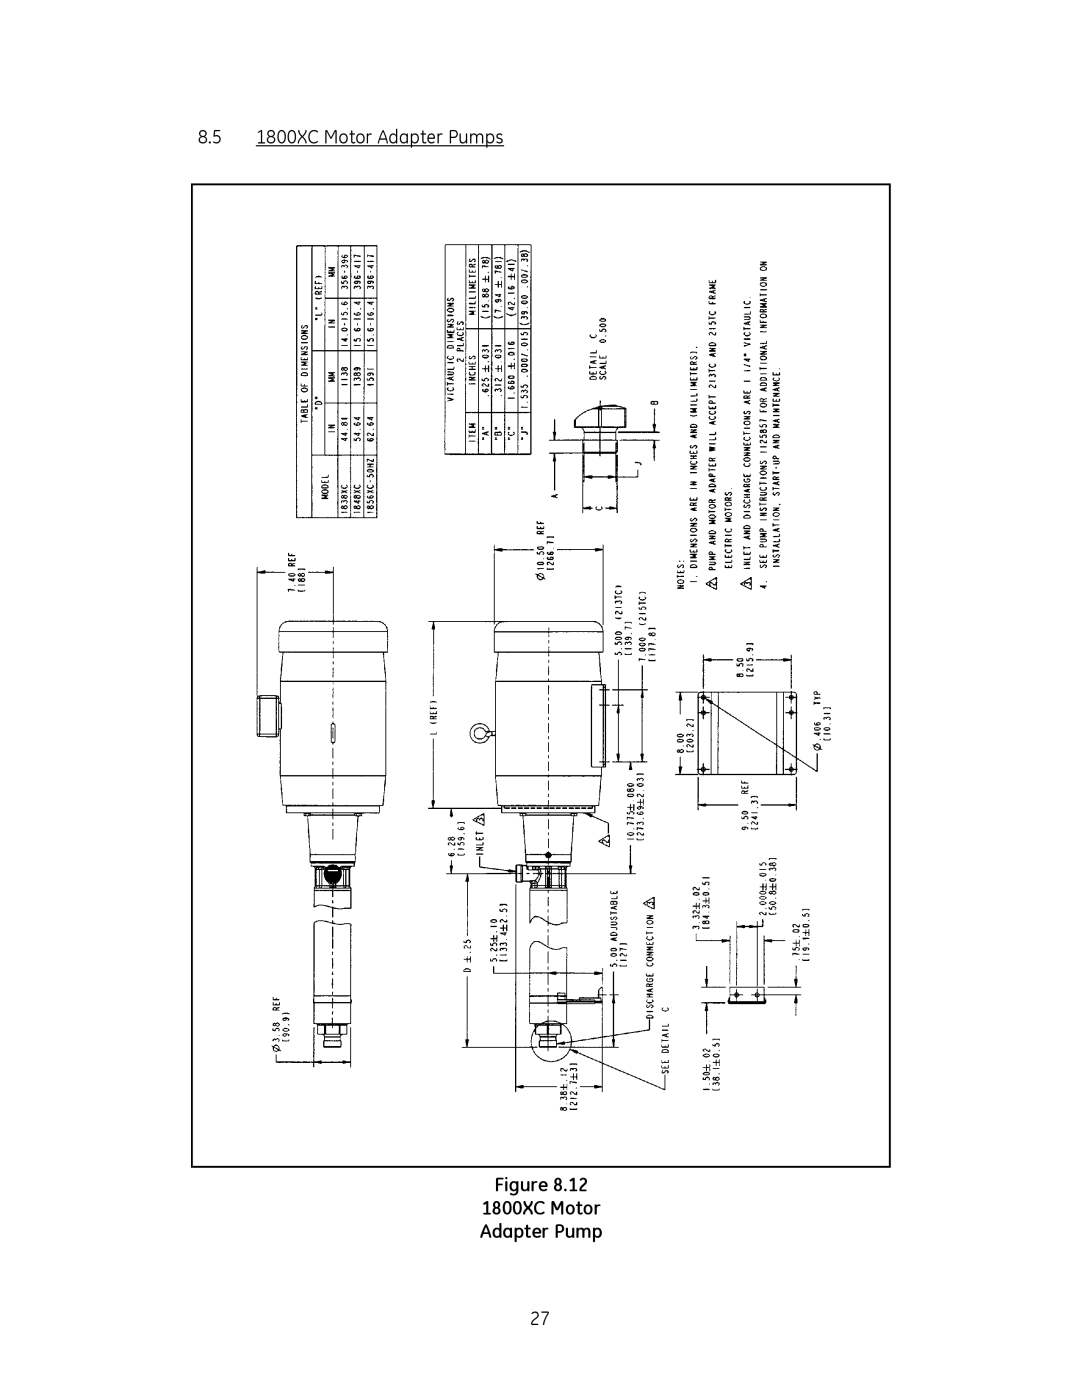 GE SS1000, SS1800, SS500 manual 8.51800XC Motor Adapter Pumps 